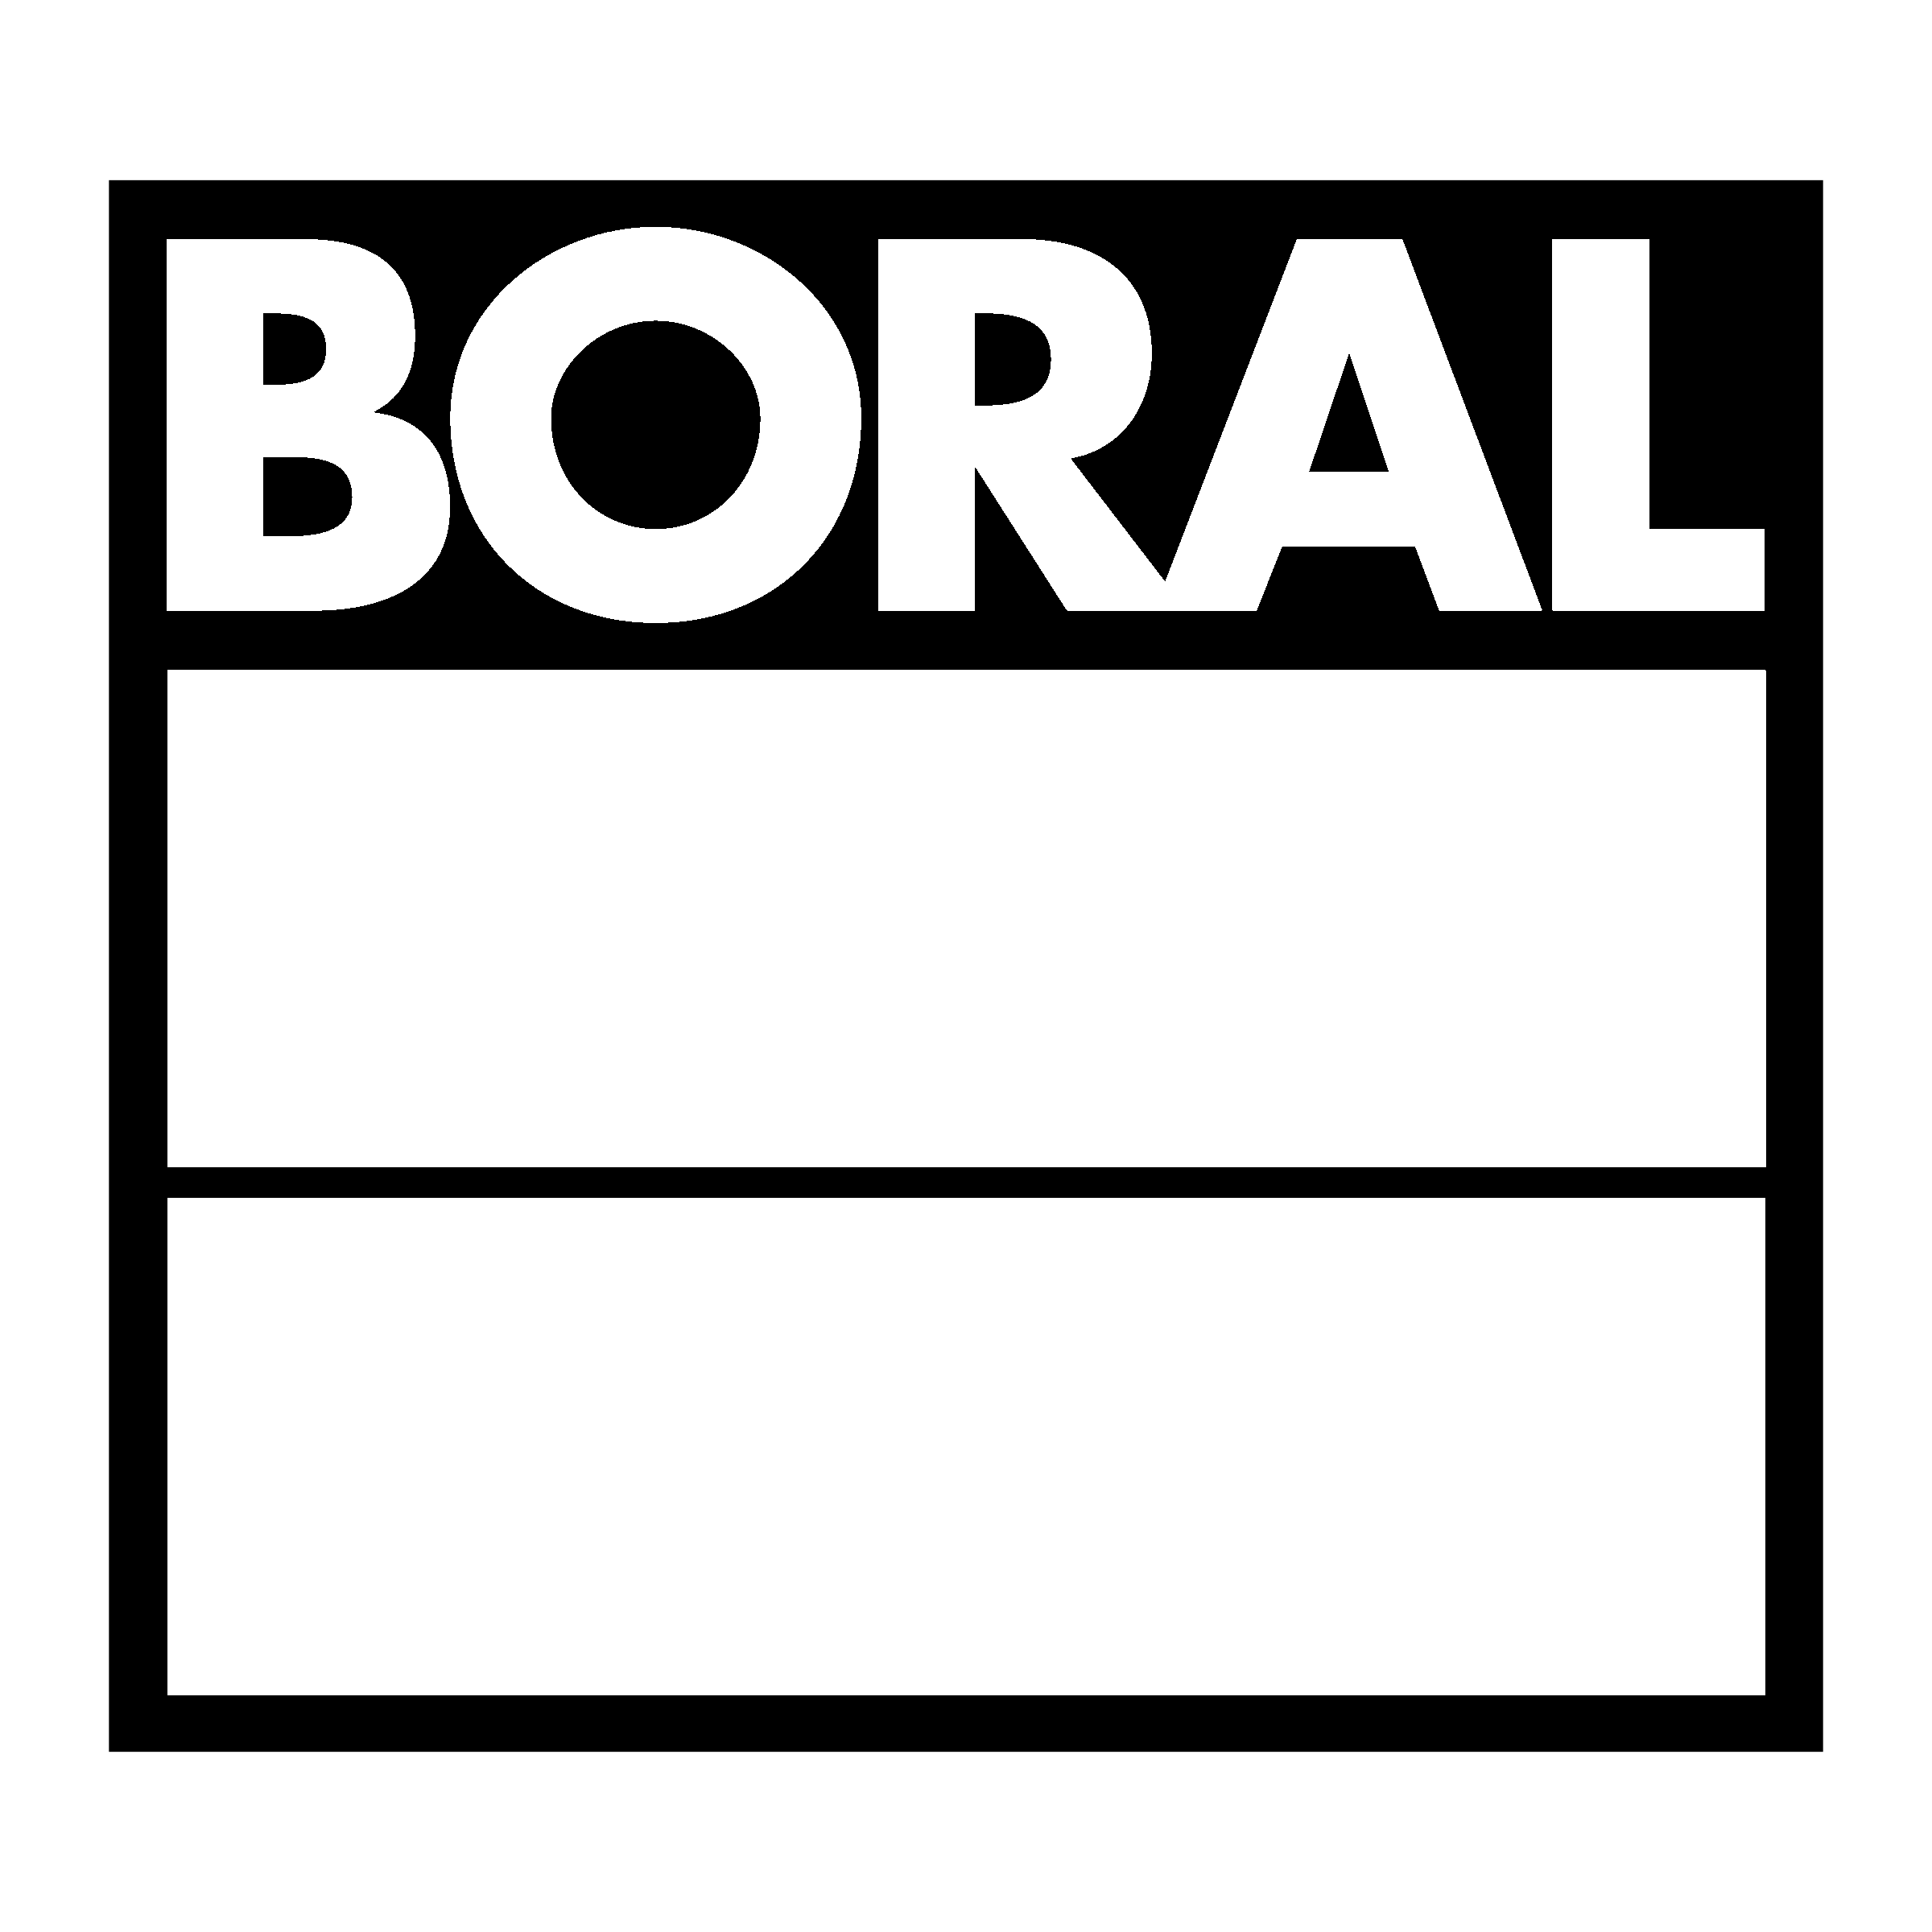 boral-logo-black-and-white